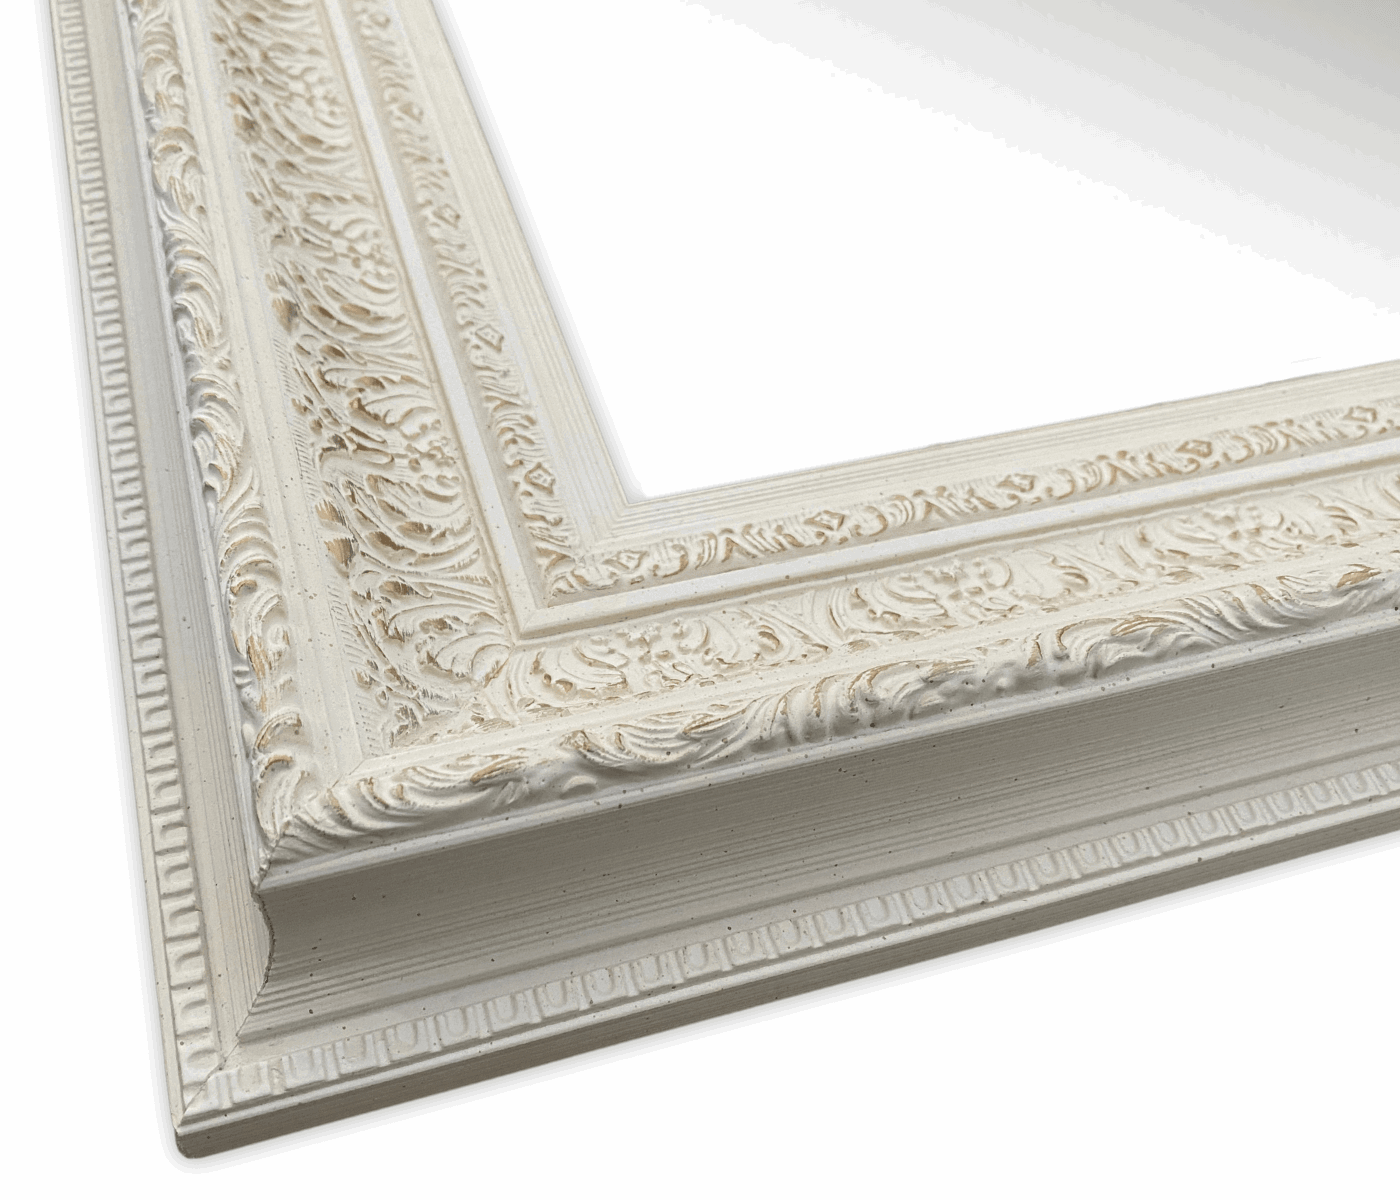 Elegance French Ornate Embossed Antique White Gold Framed Wood Wall Mirror - West Frames